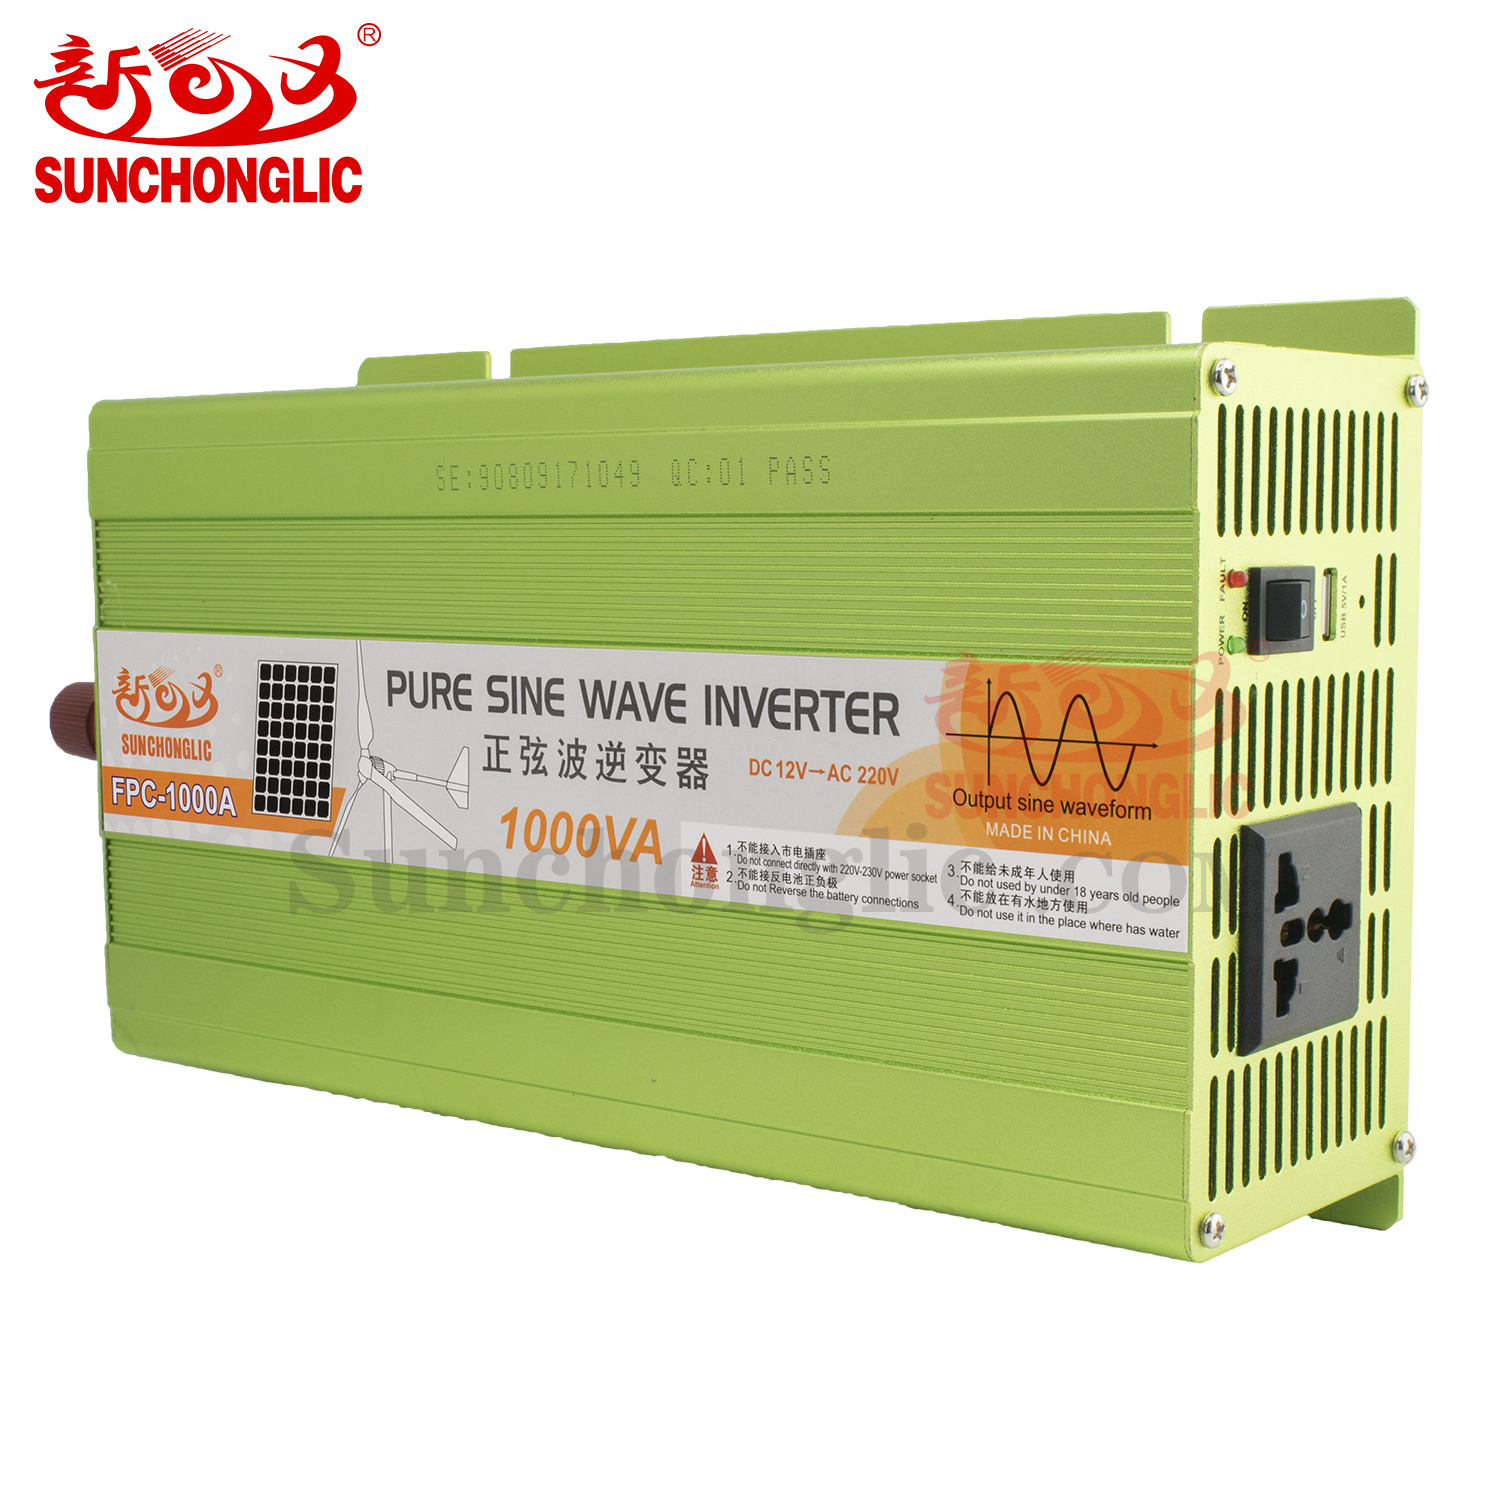 Pure Sine Wave Inverter - FPC-1000A